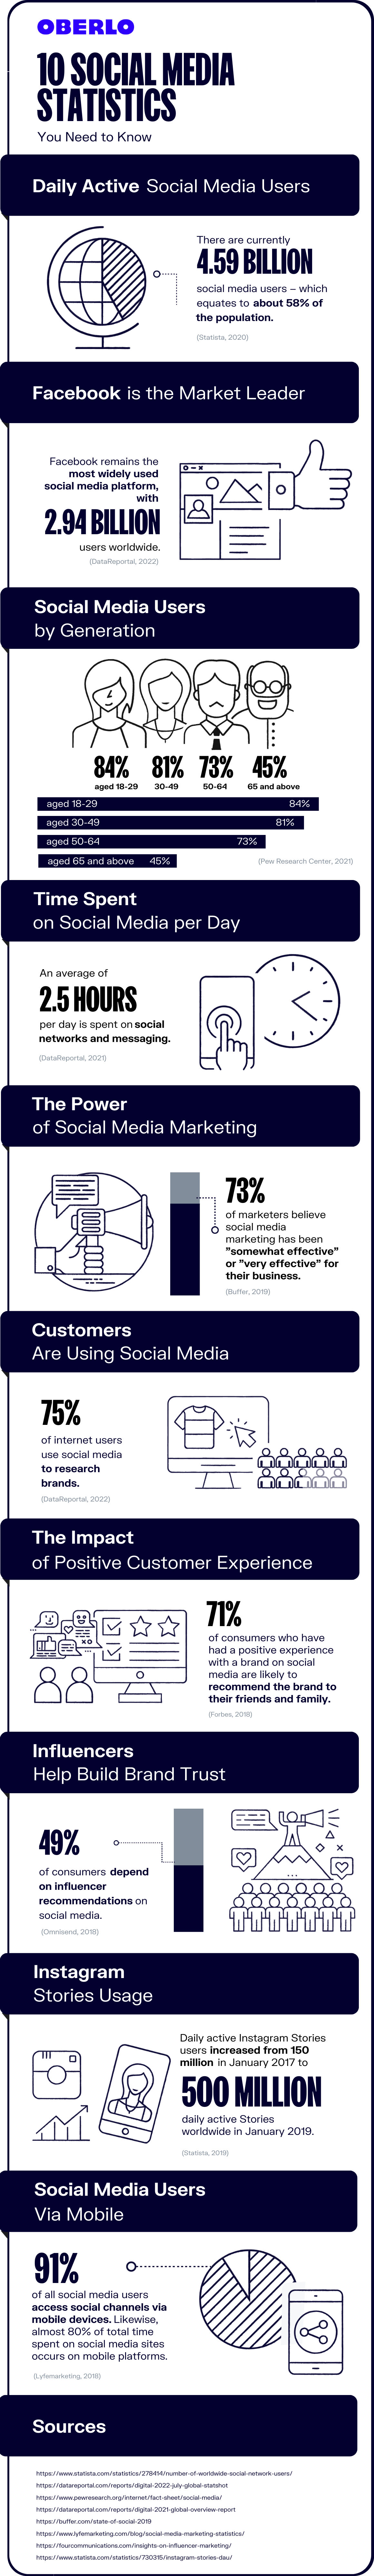 social media statistics full infographic